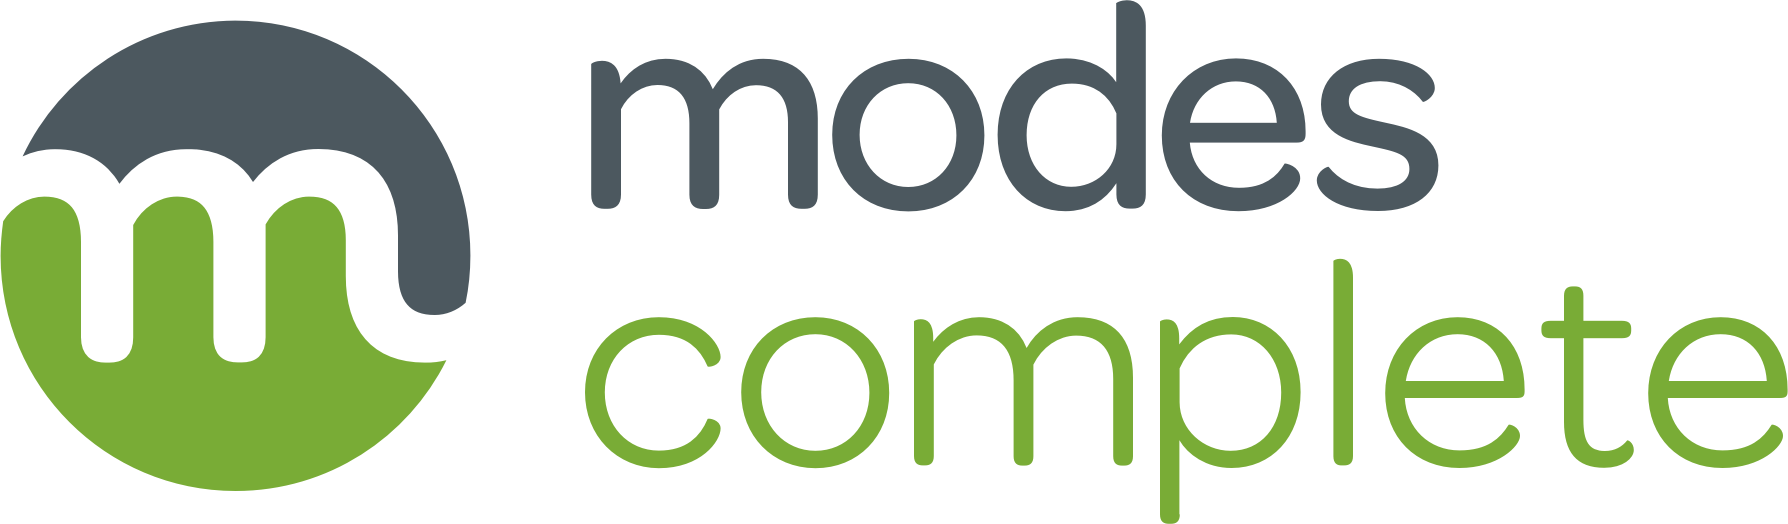 Modes Complete logo